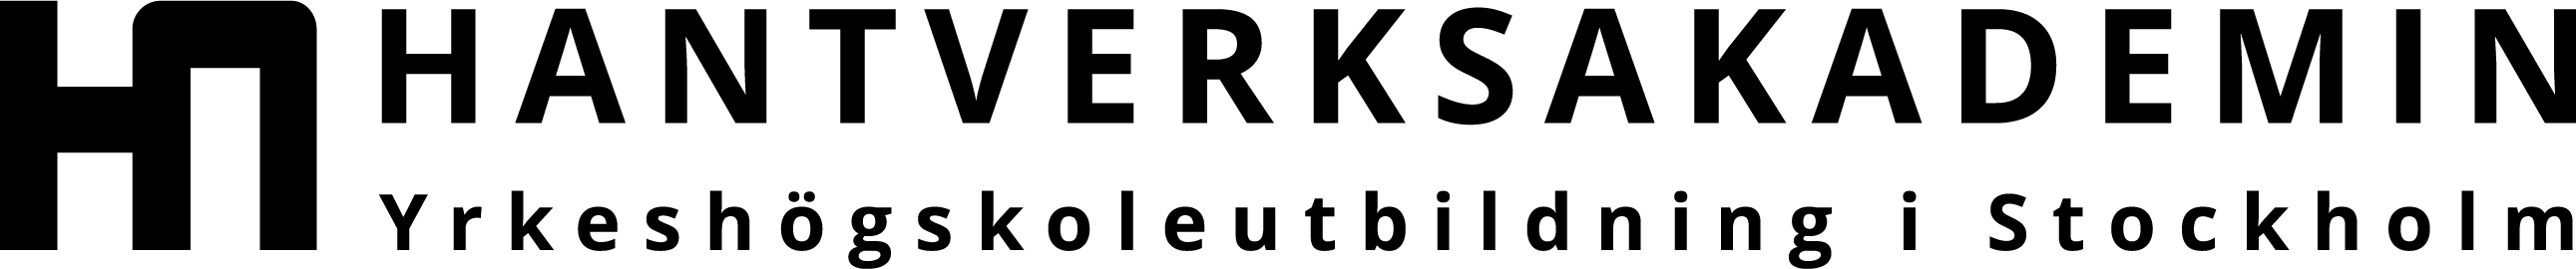 Hantverksakademin logotyp